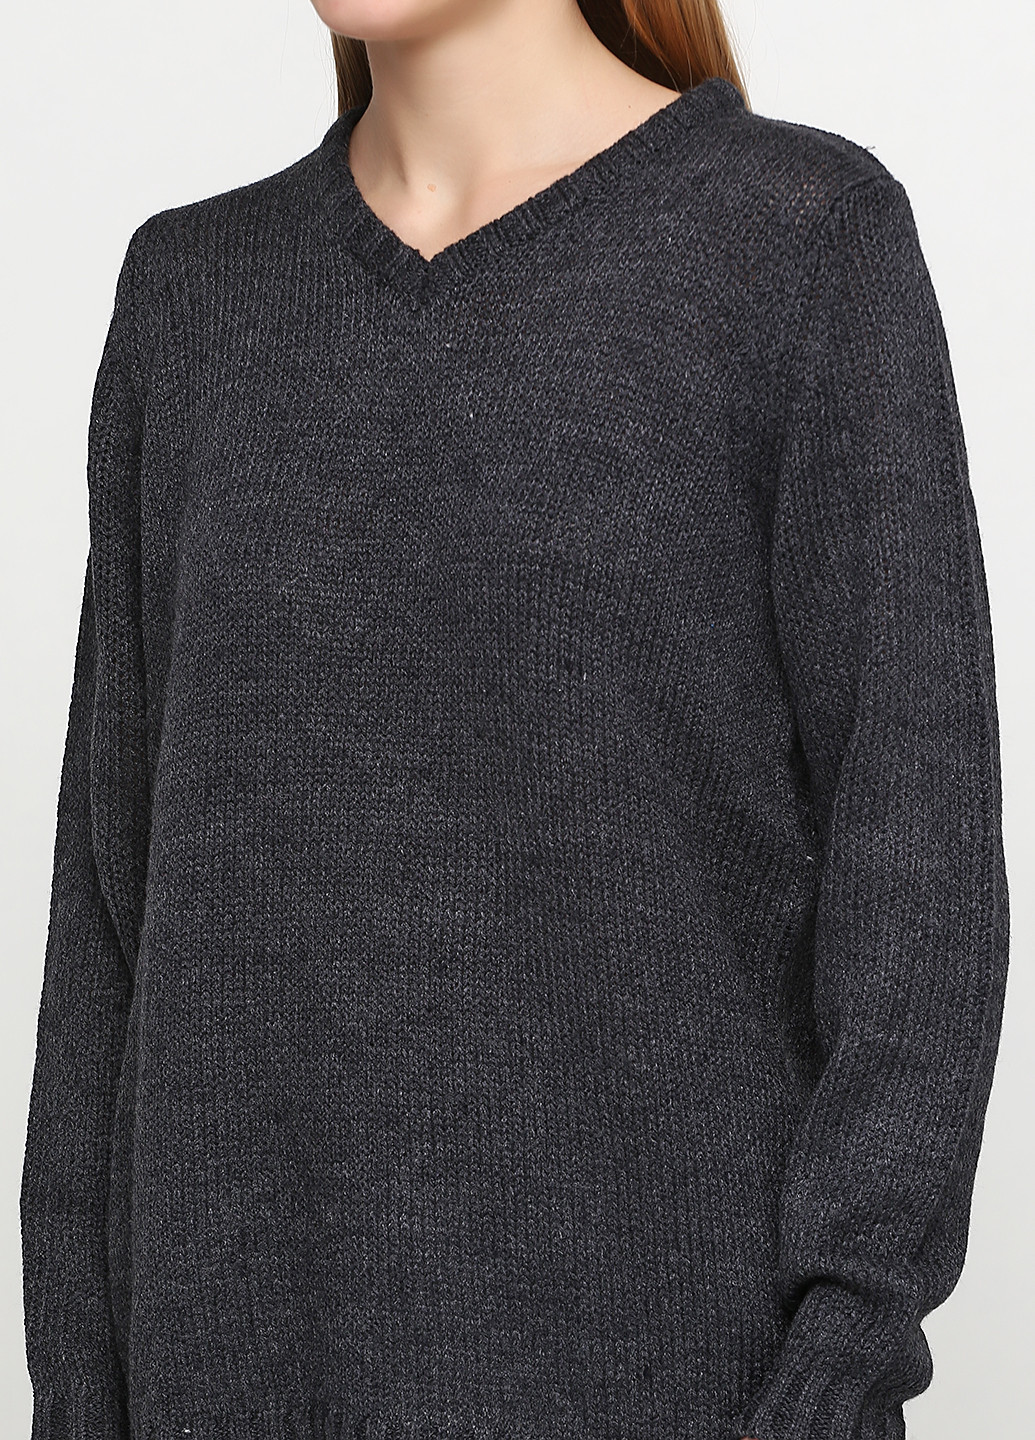 Темно-серый демисезонный пуловер пуловер Long Island